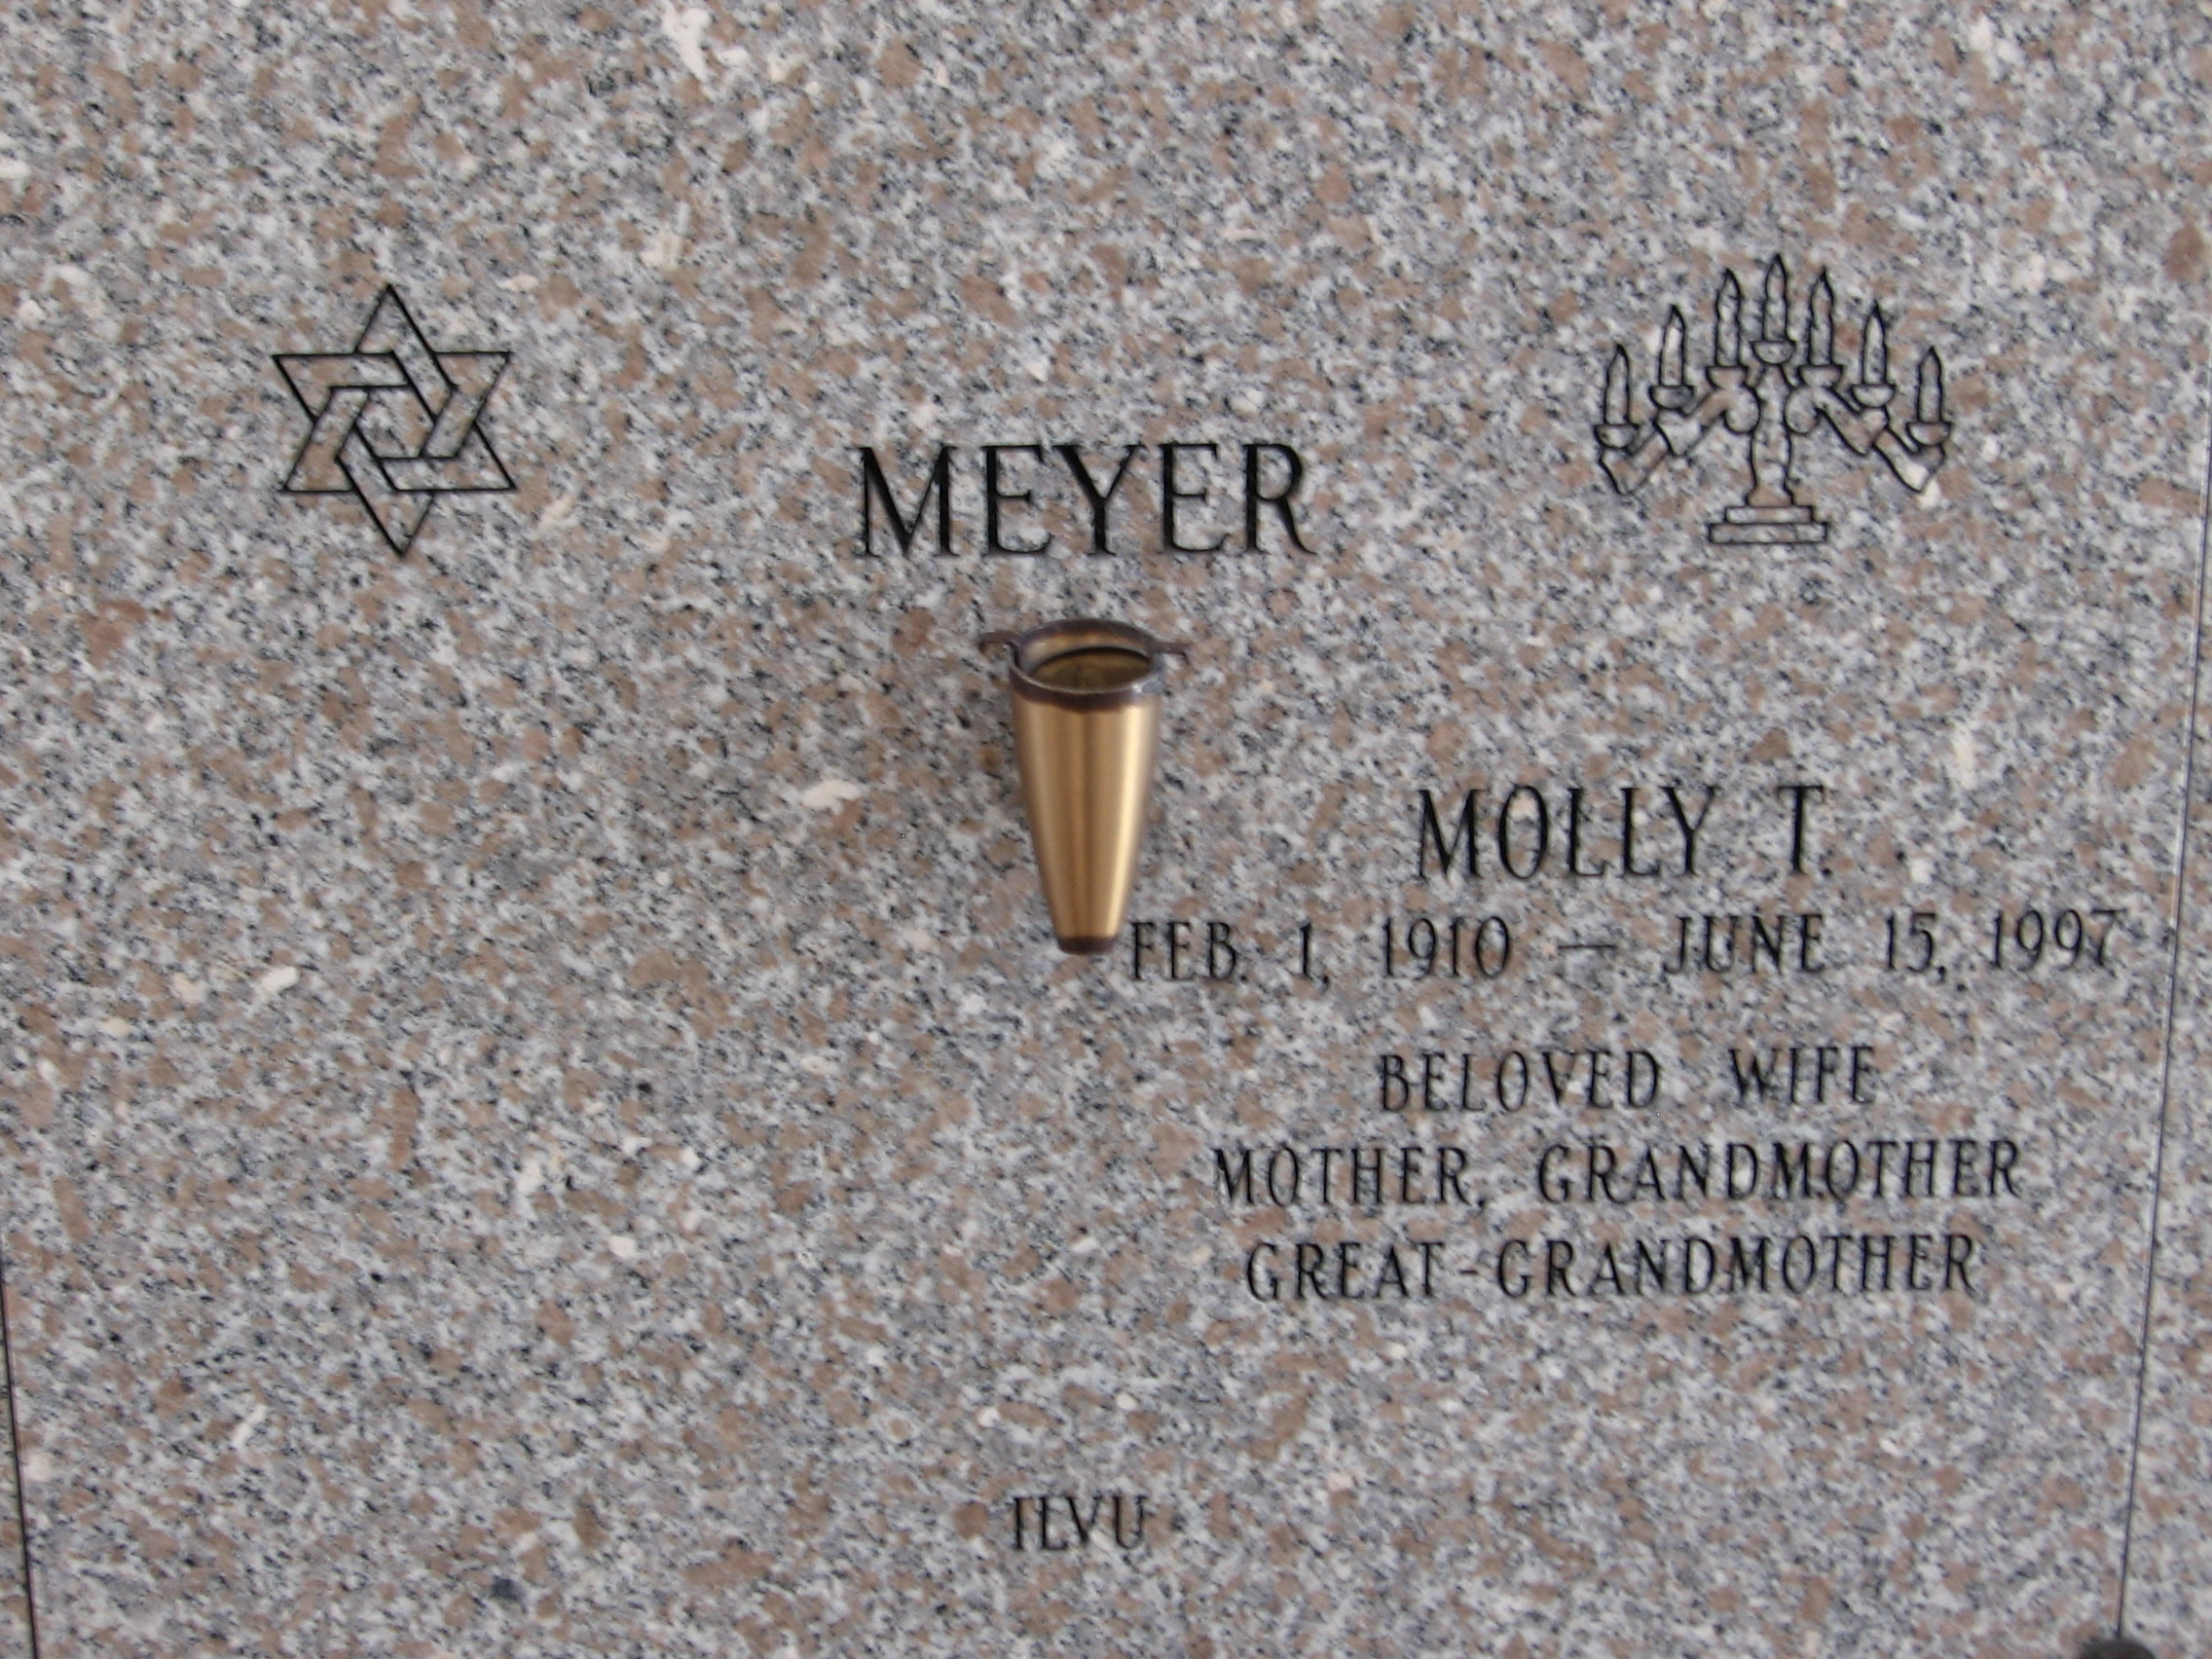 Molly T Meyer